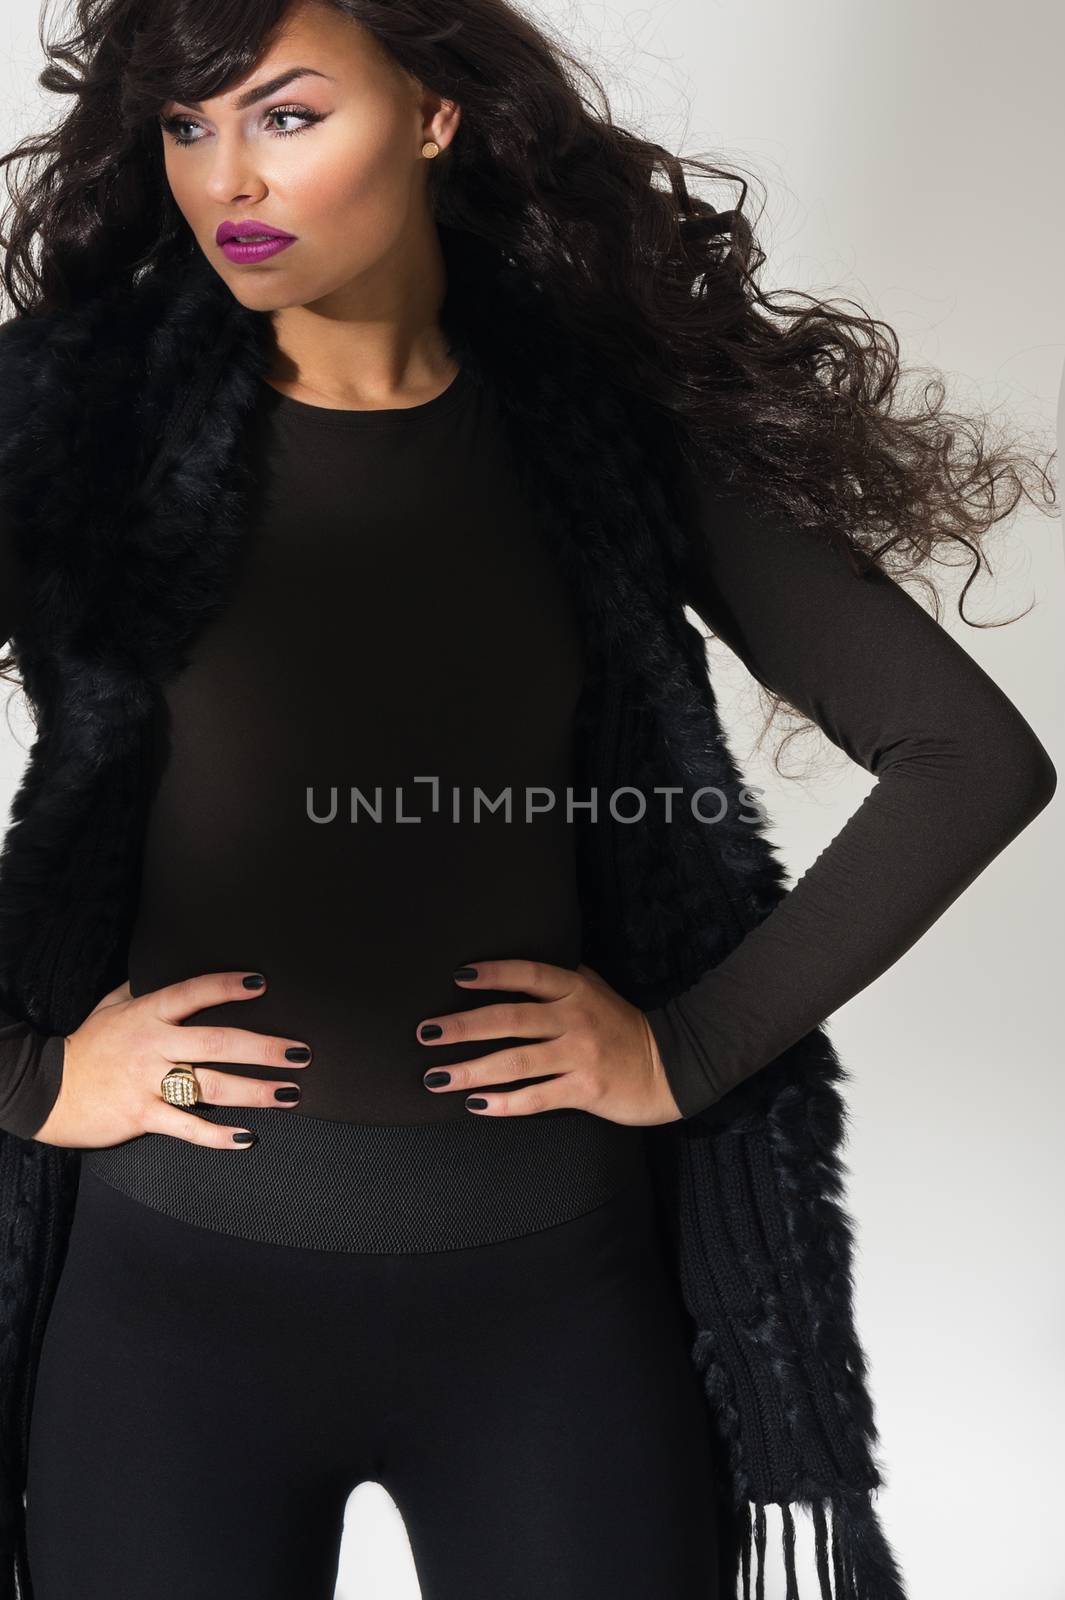 Confident fashion model in a black ensemble by MOELLERTHOMSEN